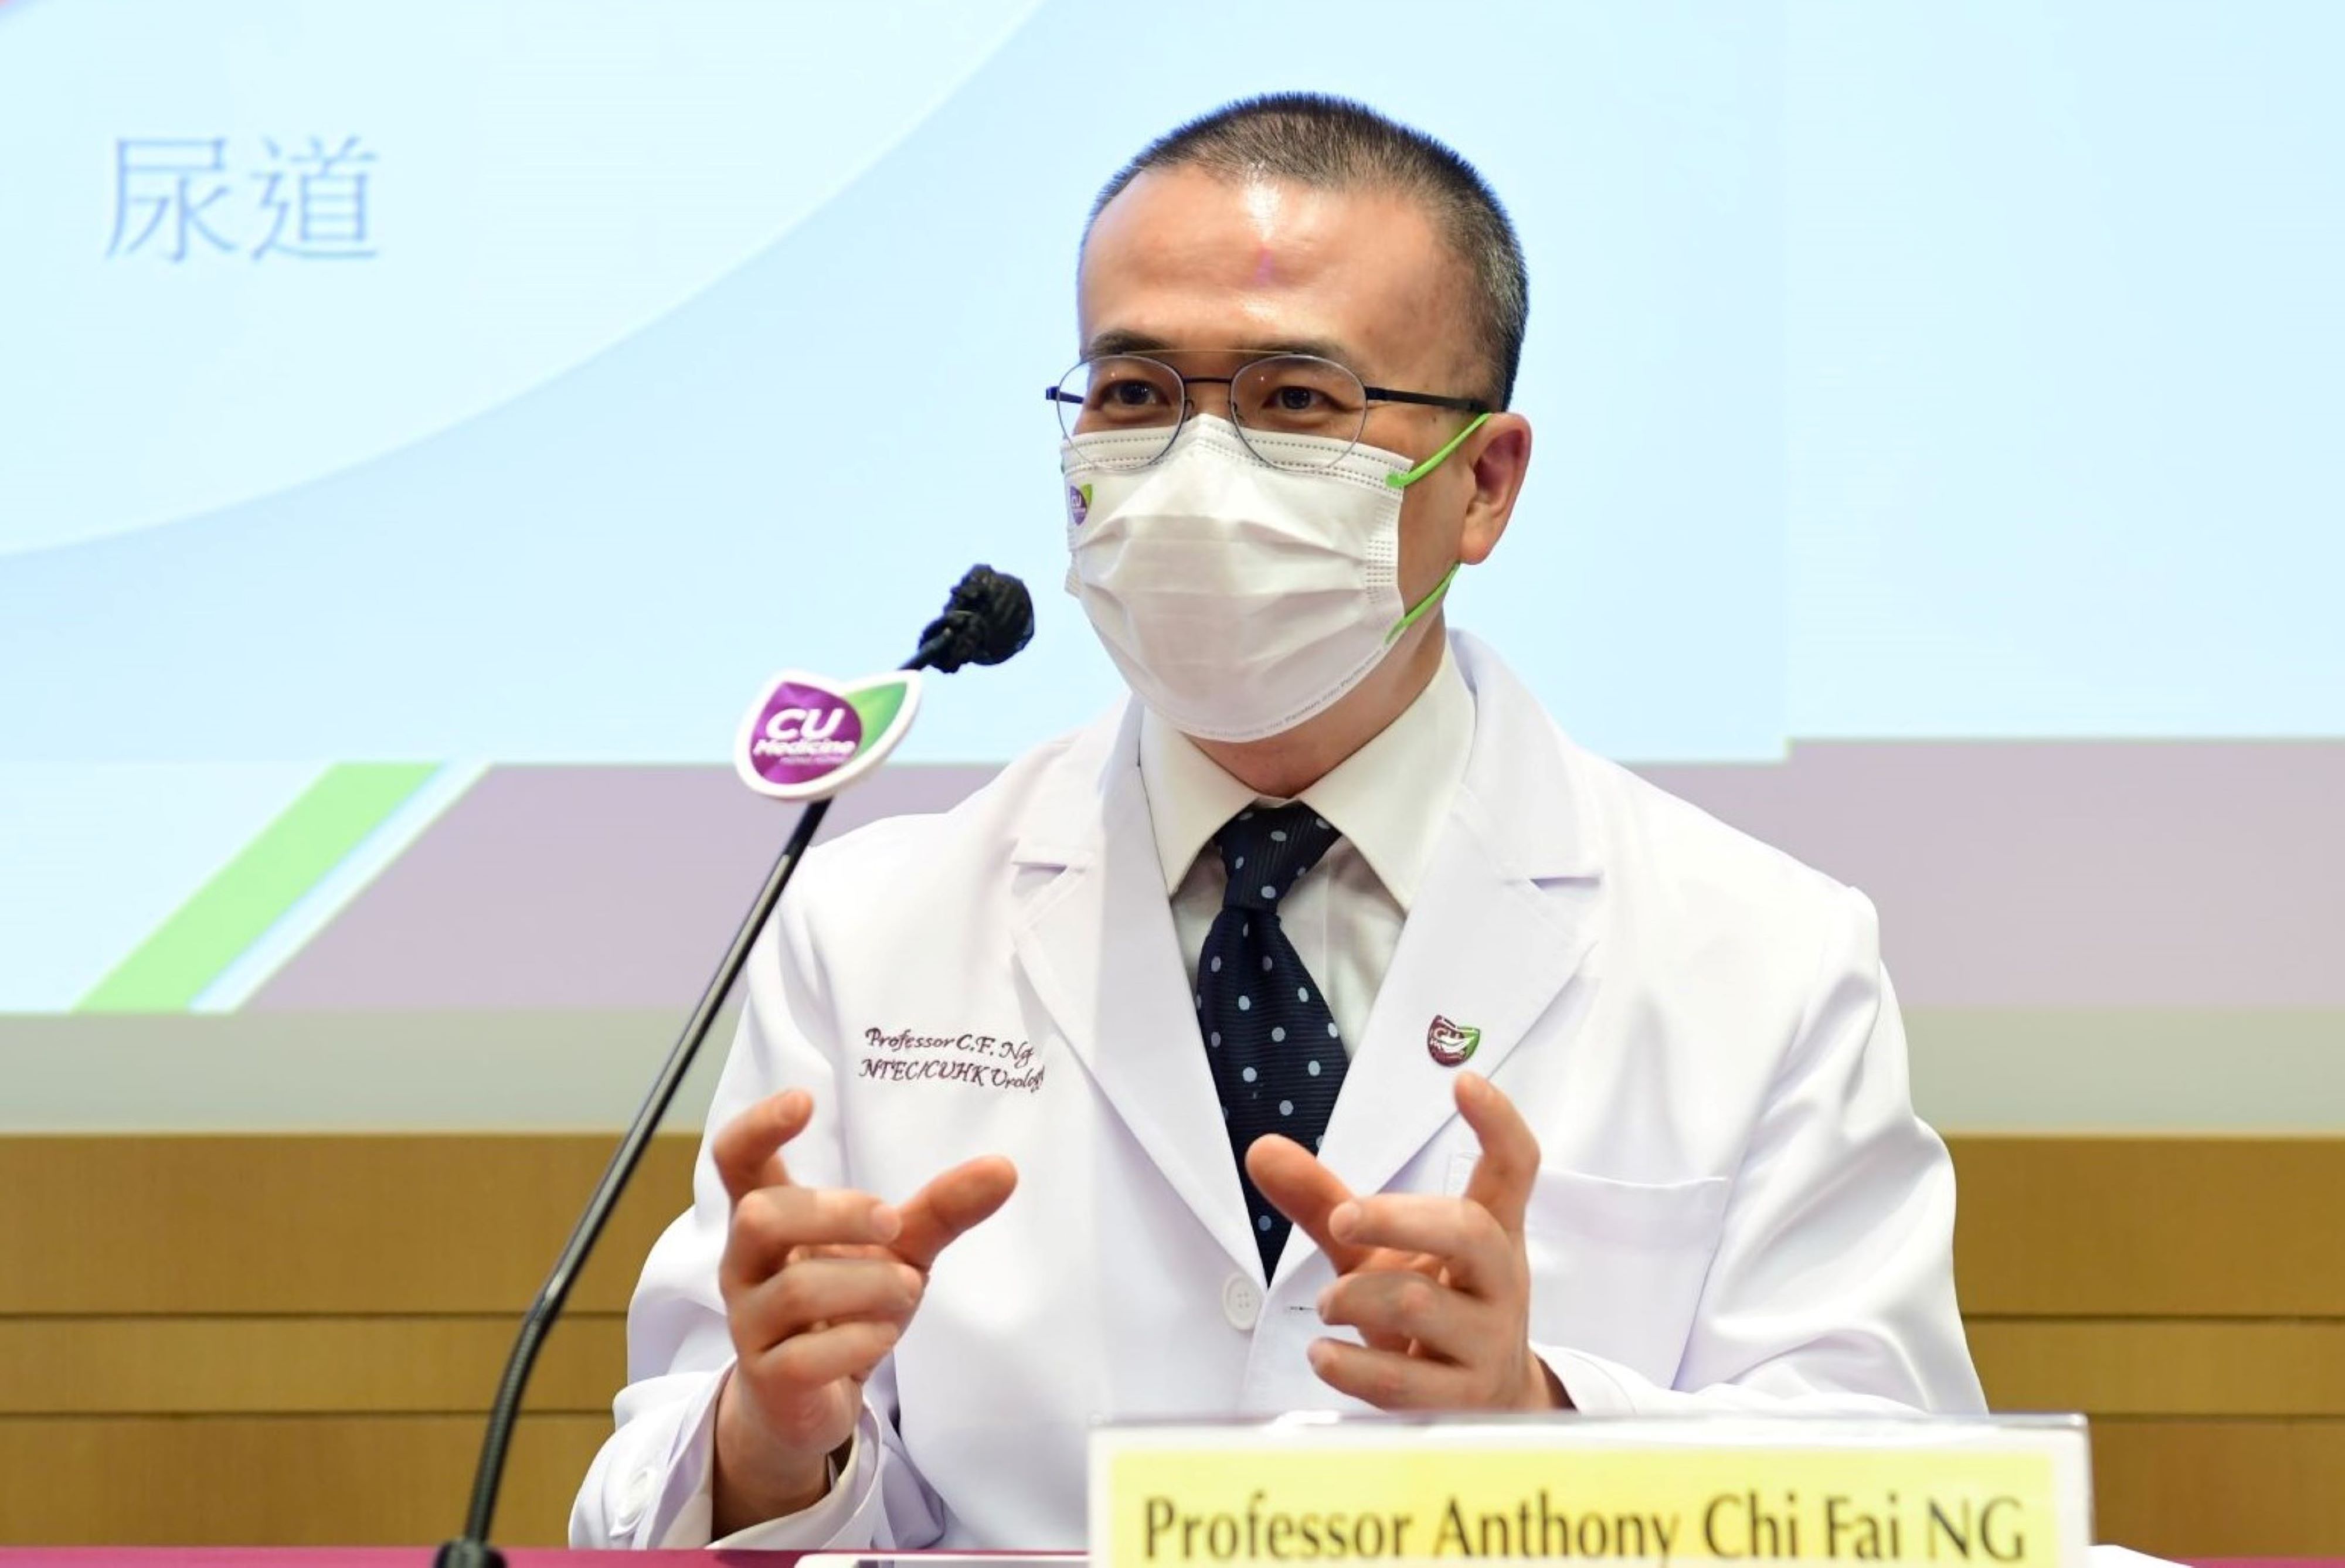 Professor Anthony Ng